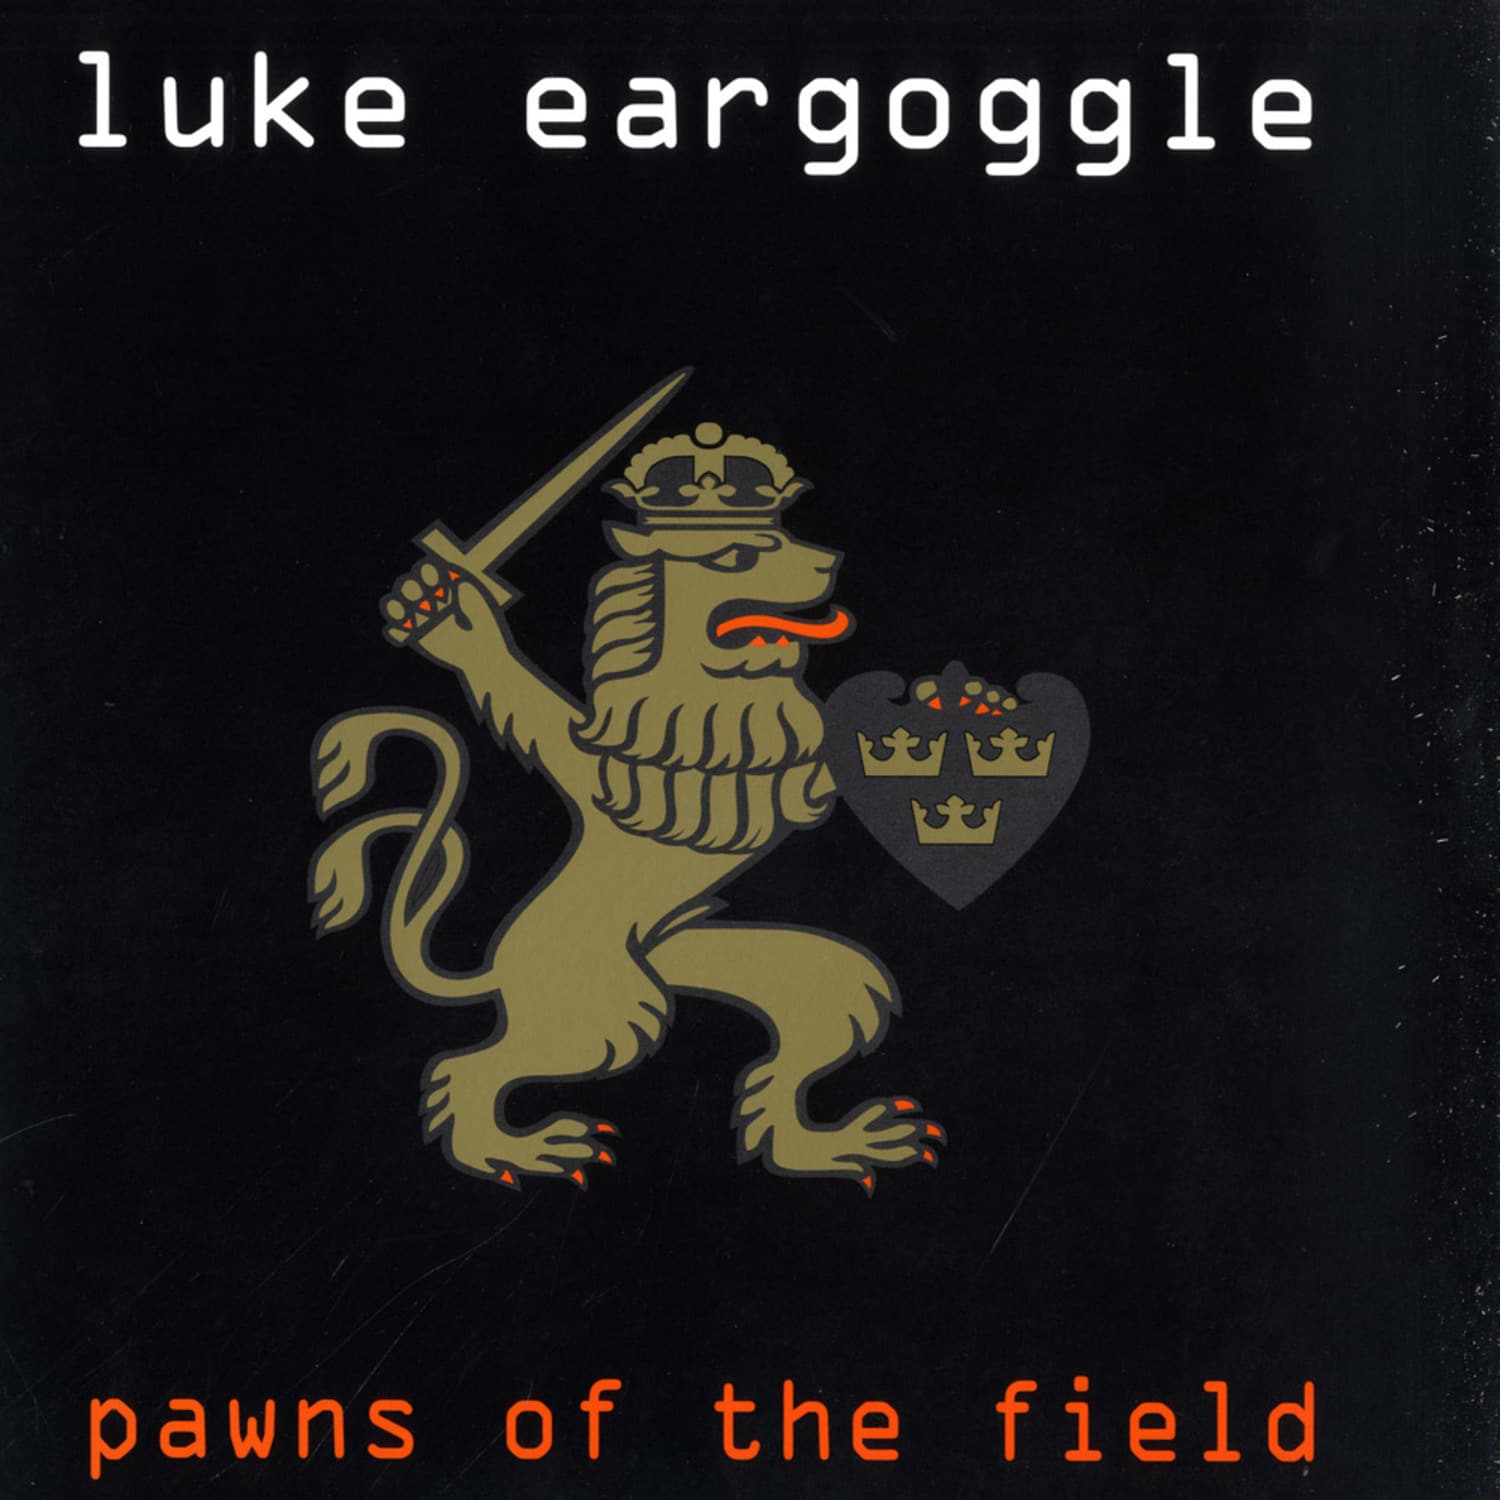 Luke Eargoggle - PAWNS OF THE FIELD 